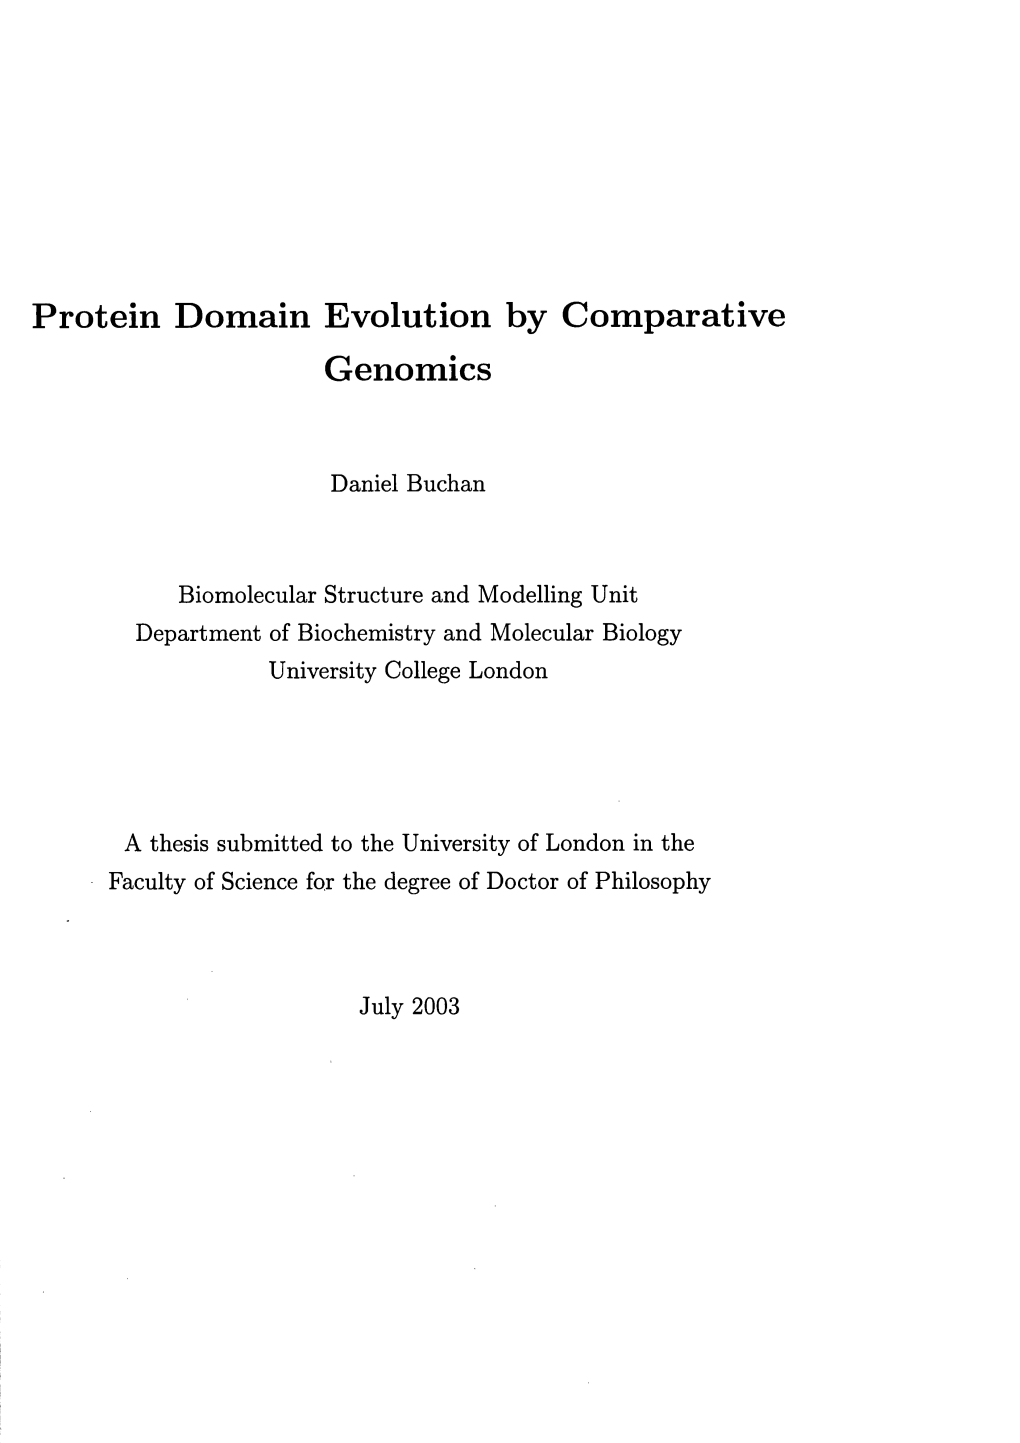 Protein Domain Evolution by Comparative Genomics